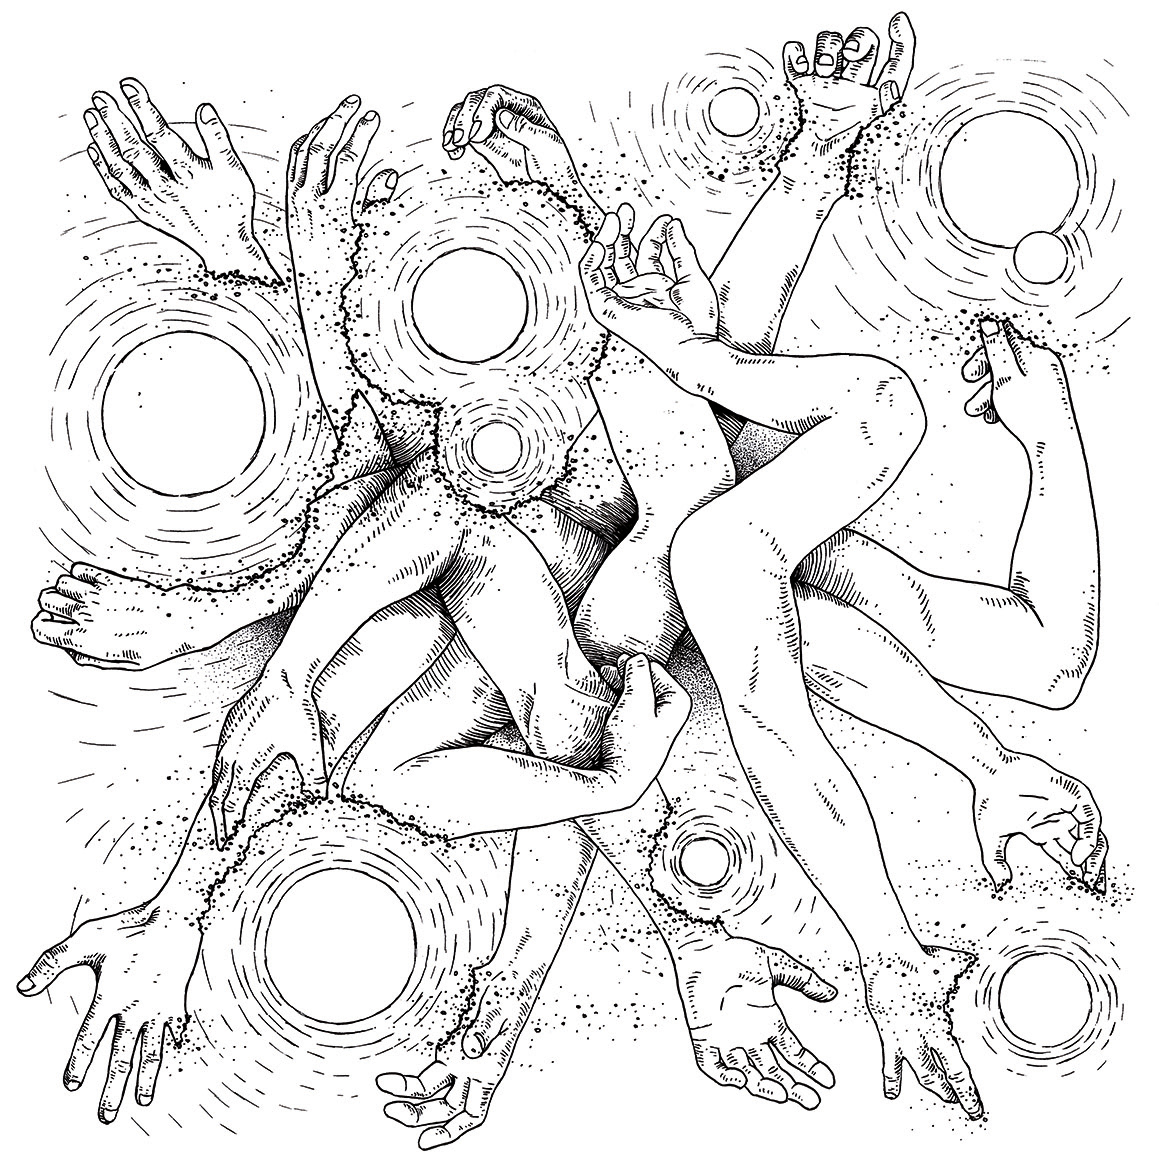 ILLUSTRATION  anatomical drawing handdrawing vinyl coverdesign